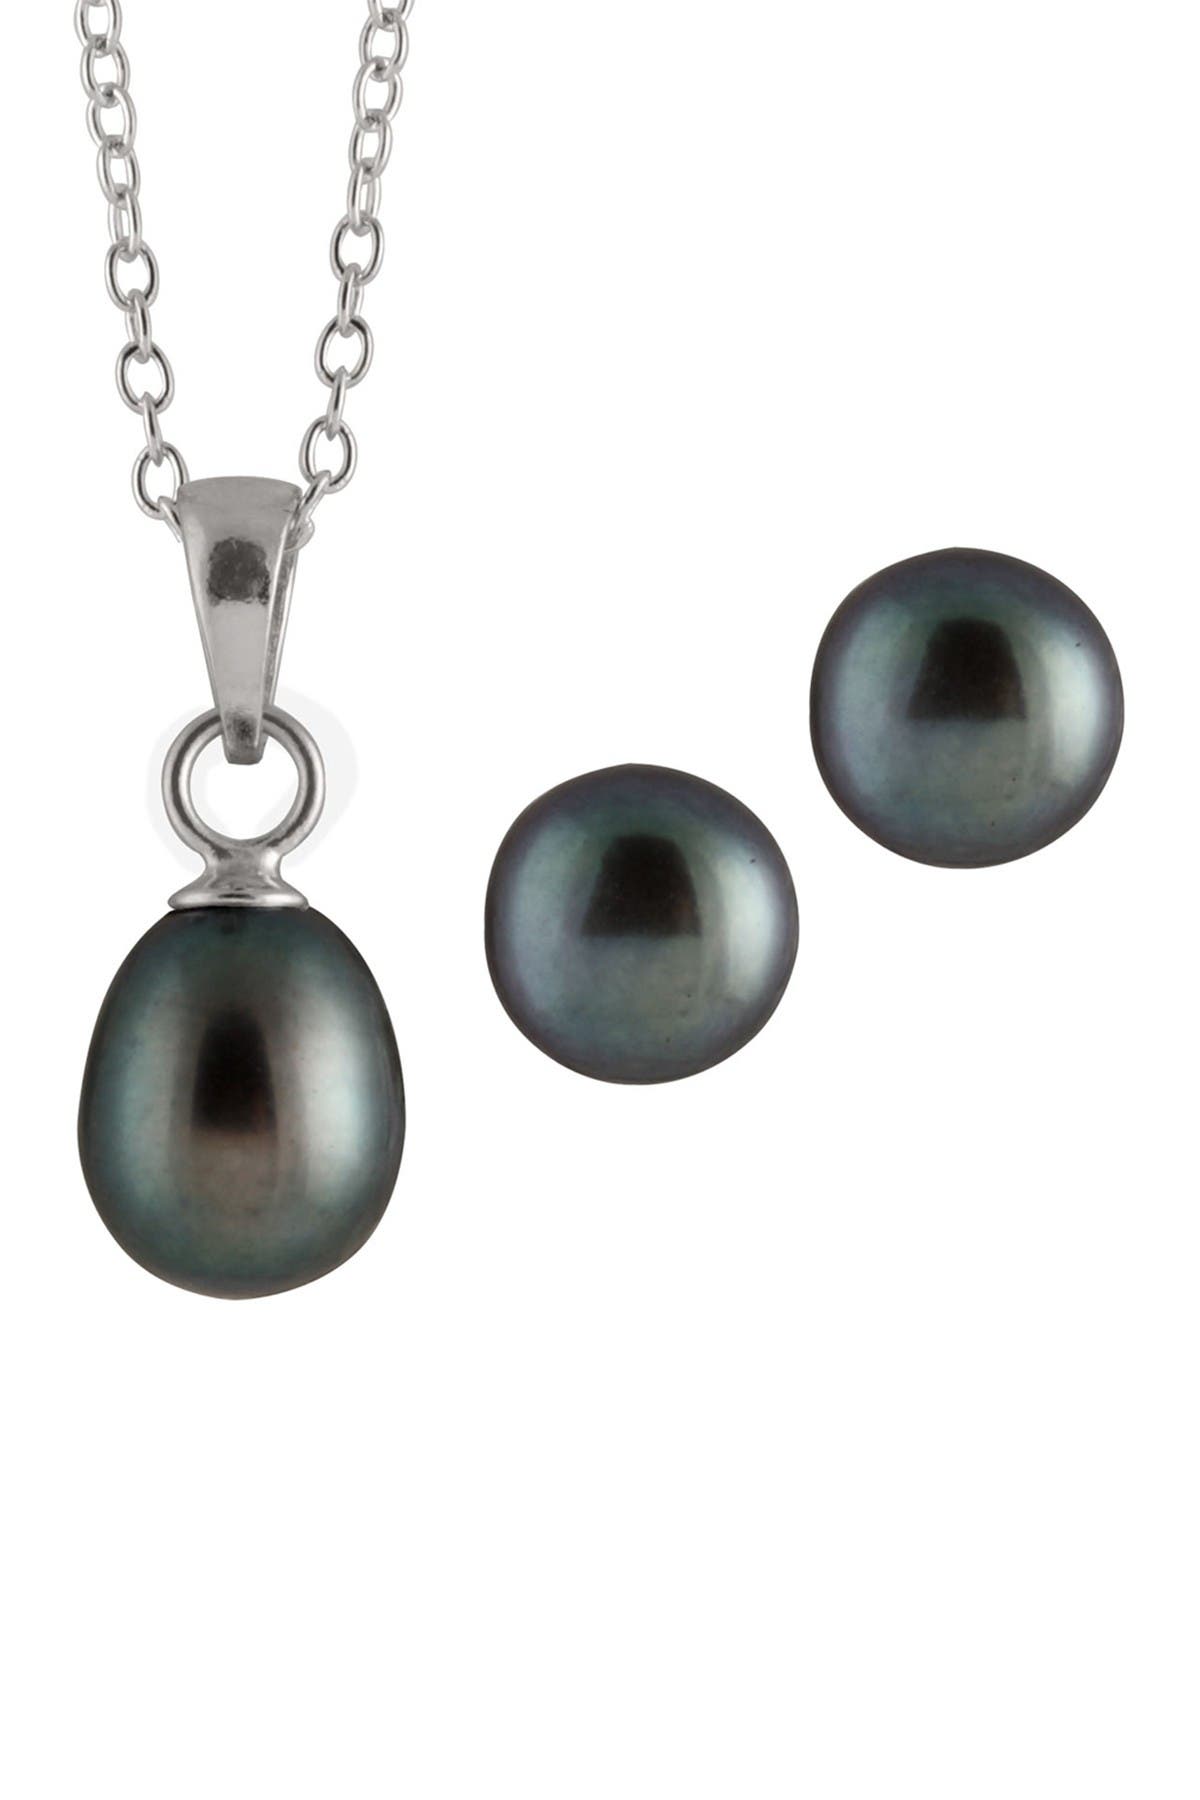 Splendid Pearls 6.5-7mm Black Freshwater Pearl Earrings & Necklace Set